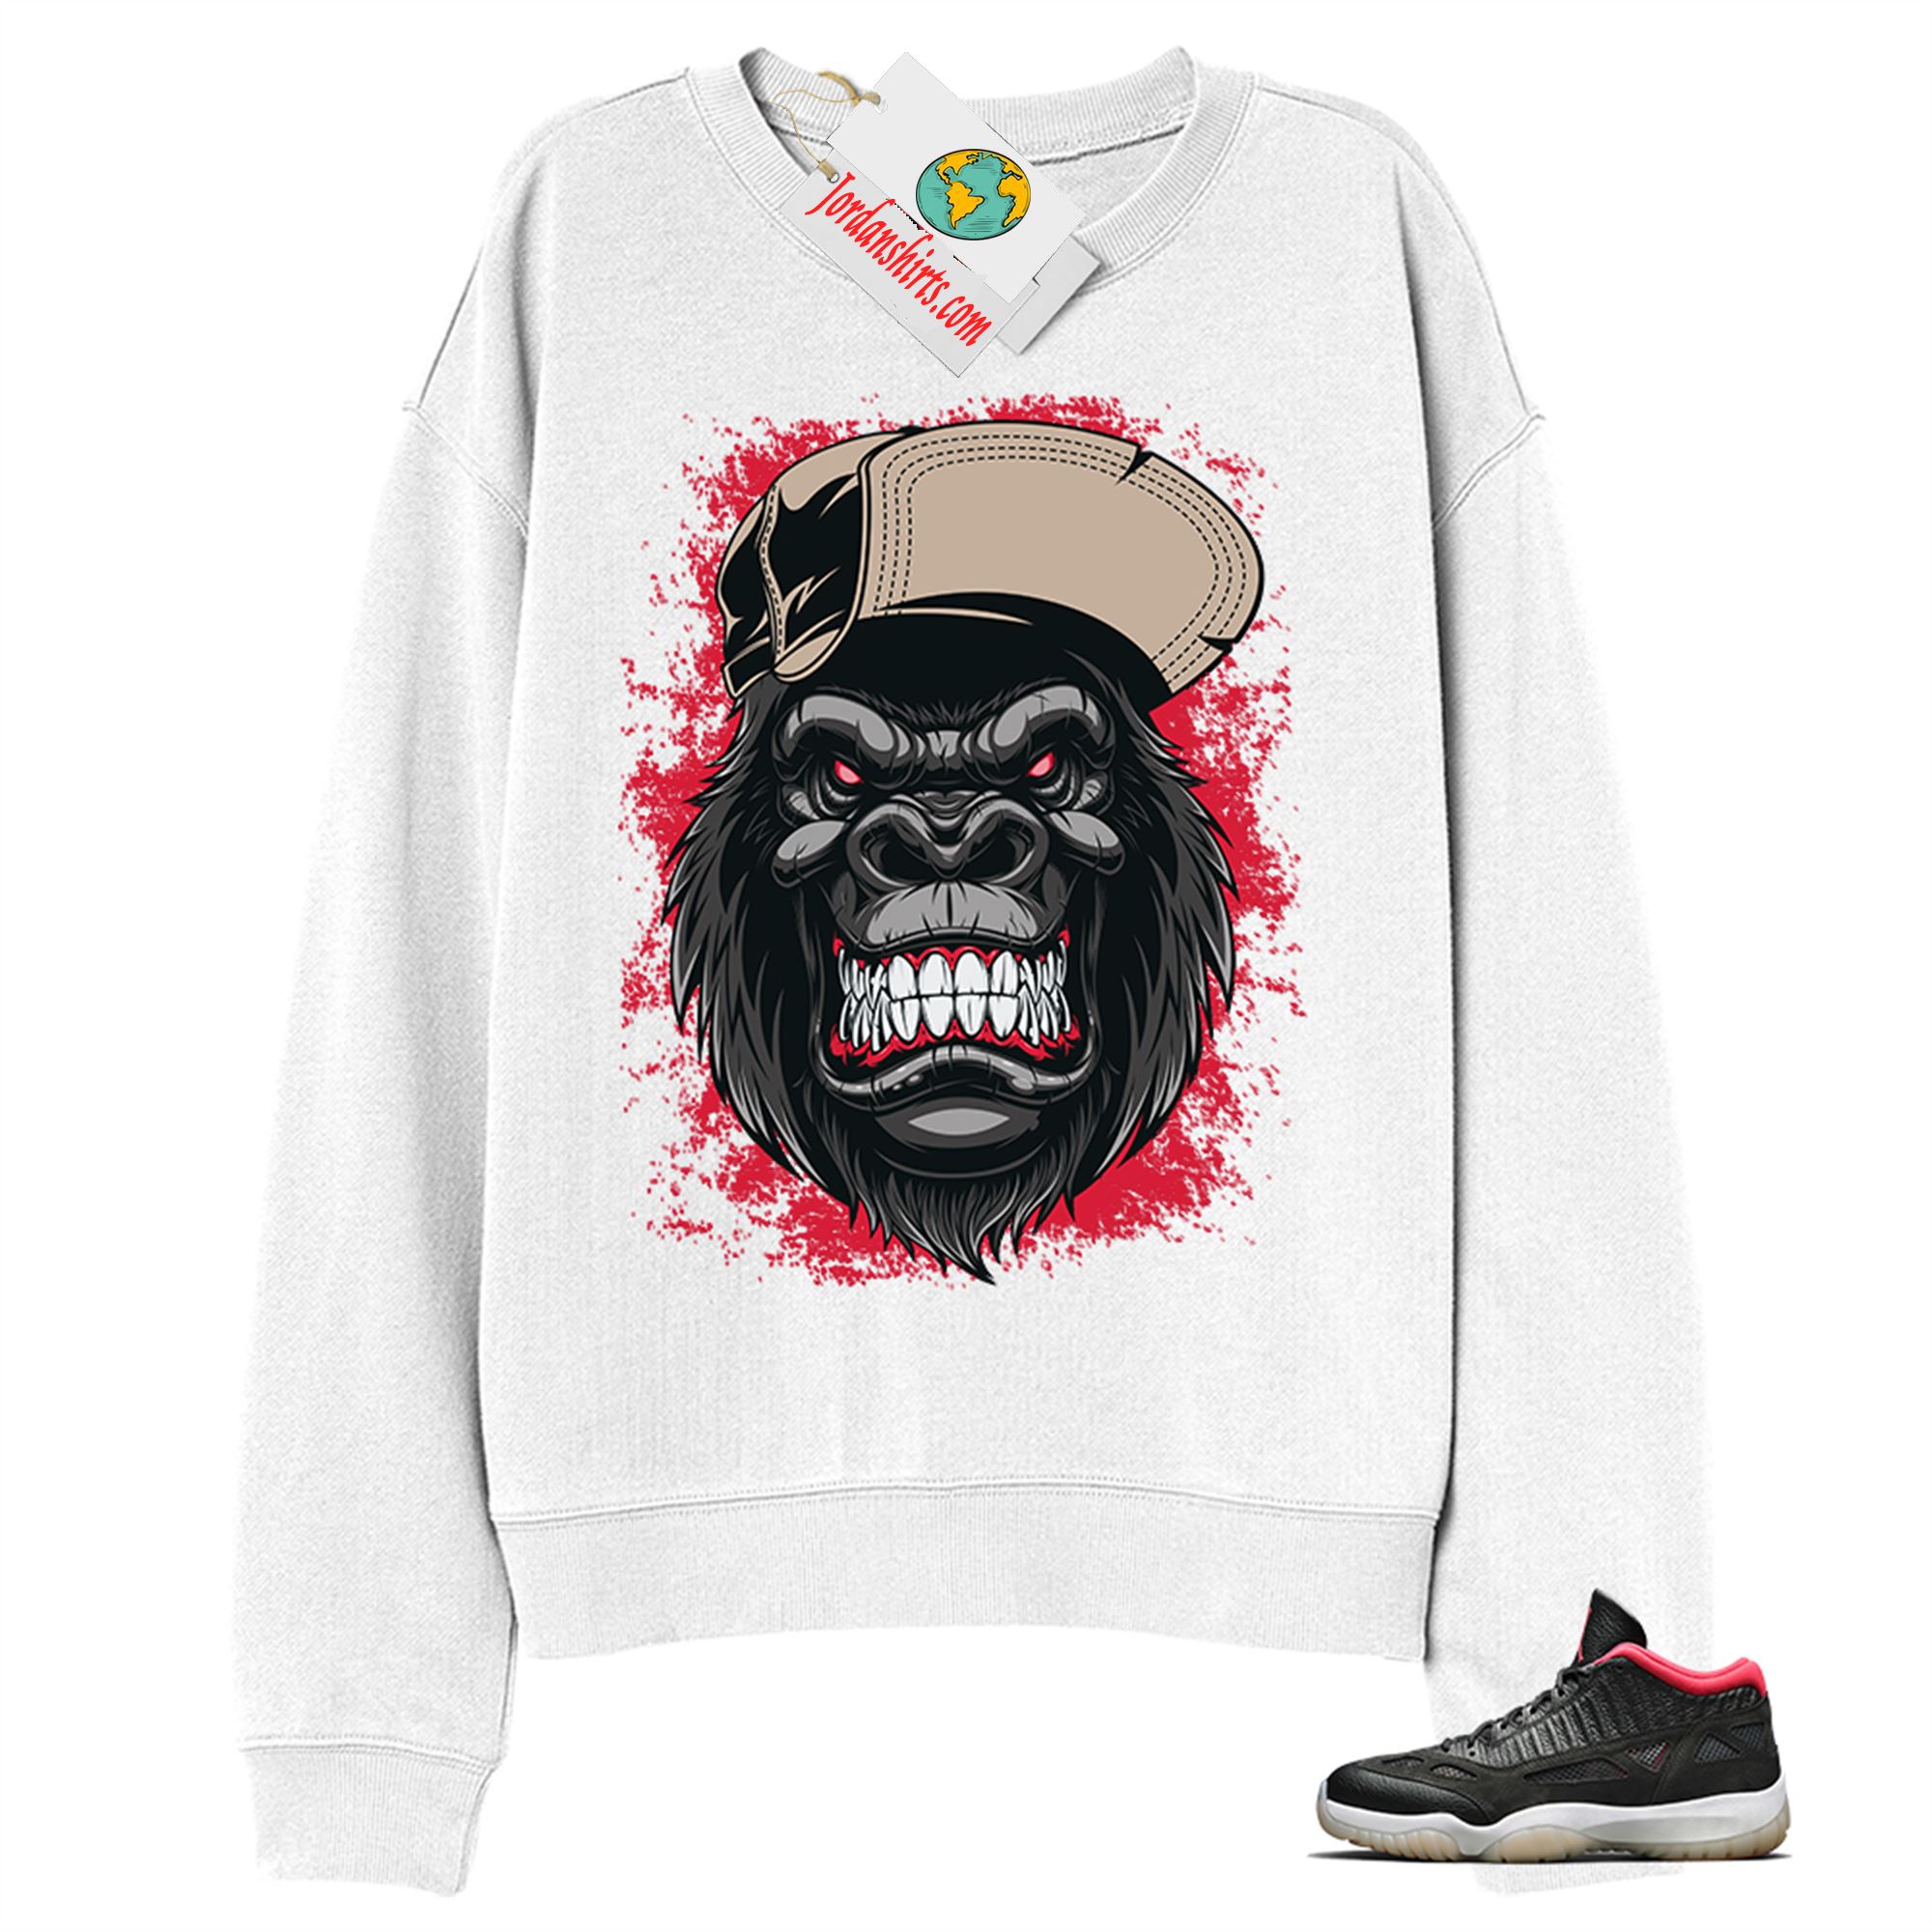 Jordan 11 Sweatshirt, Ferocious Gorilla White Sweatshirt Air Jordan 11 Bred 11s Size Up To 5xl